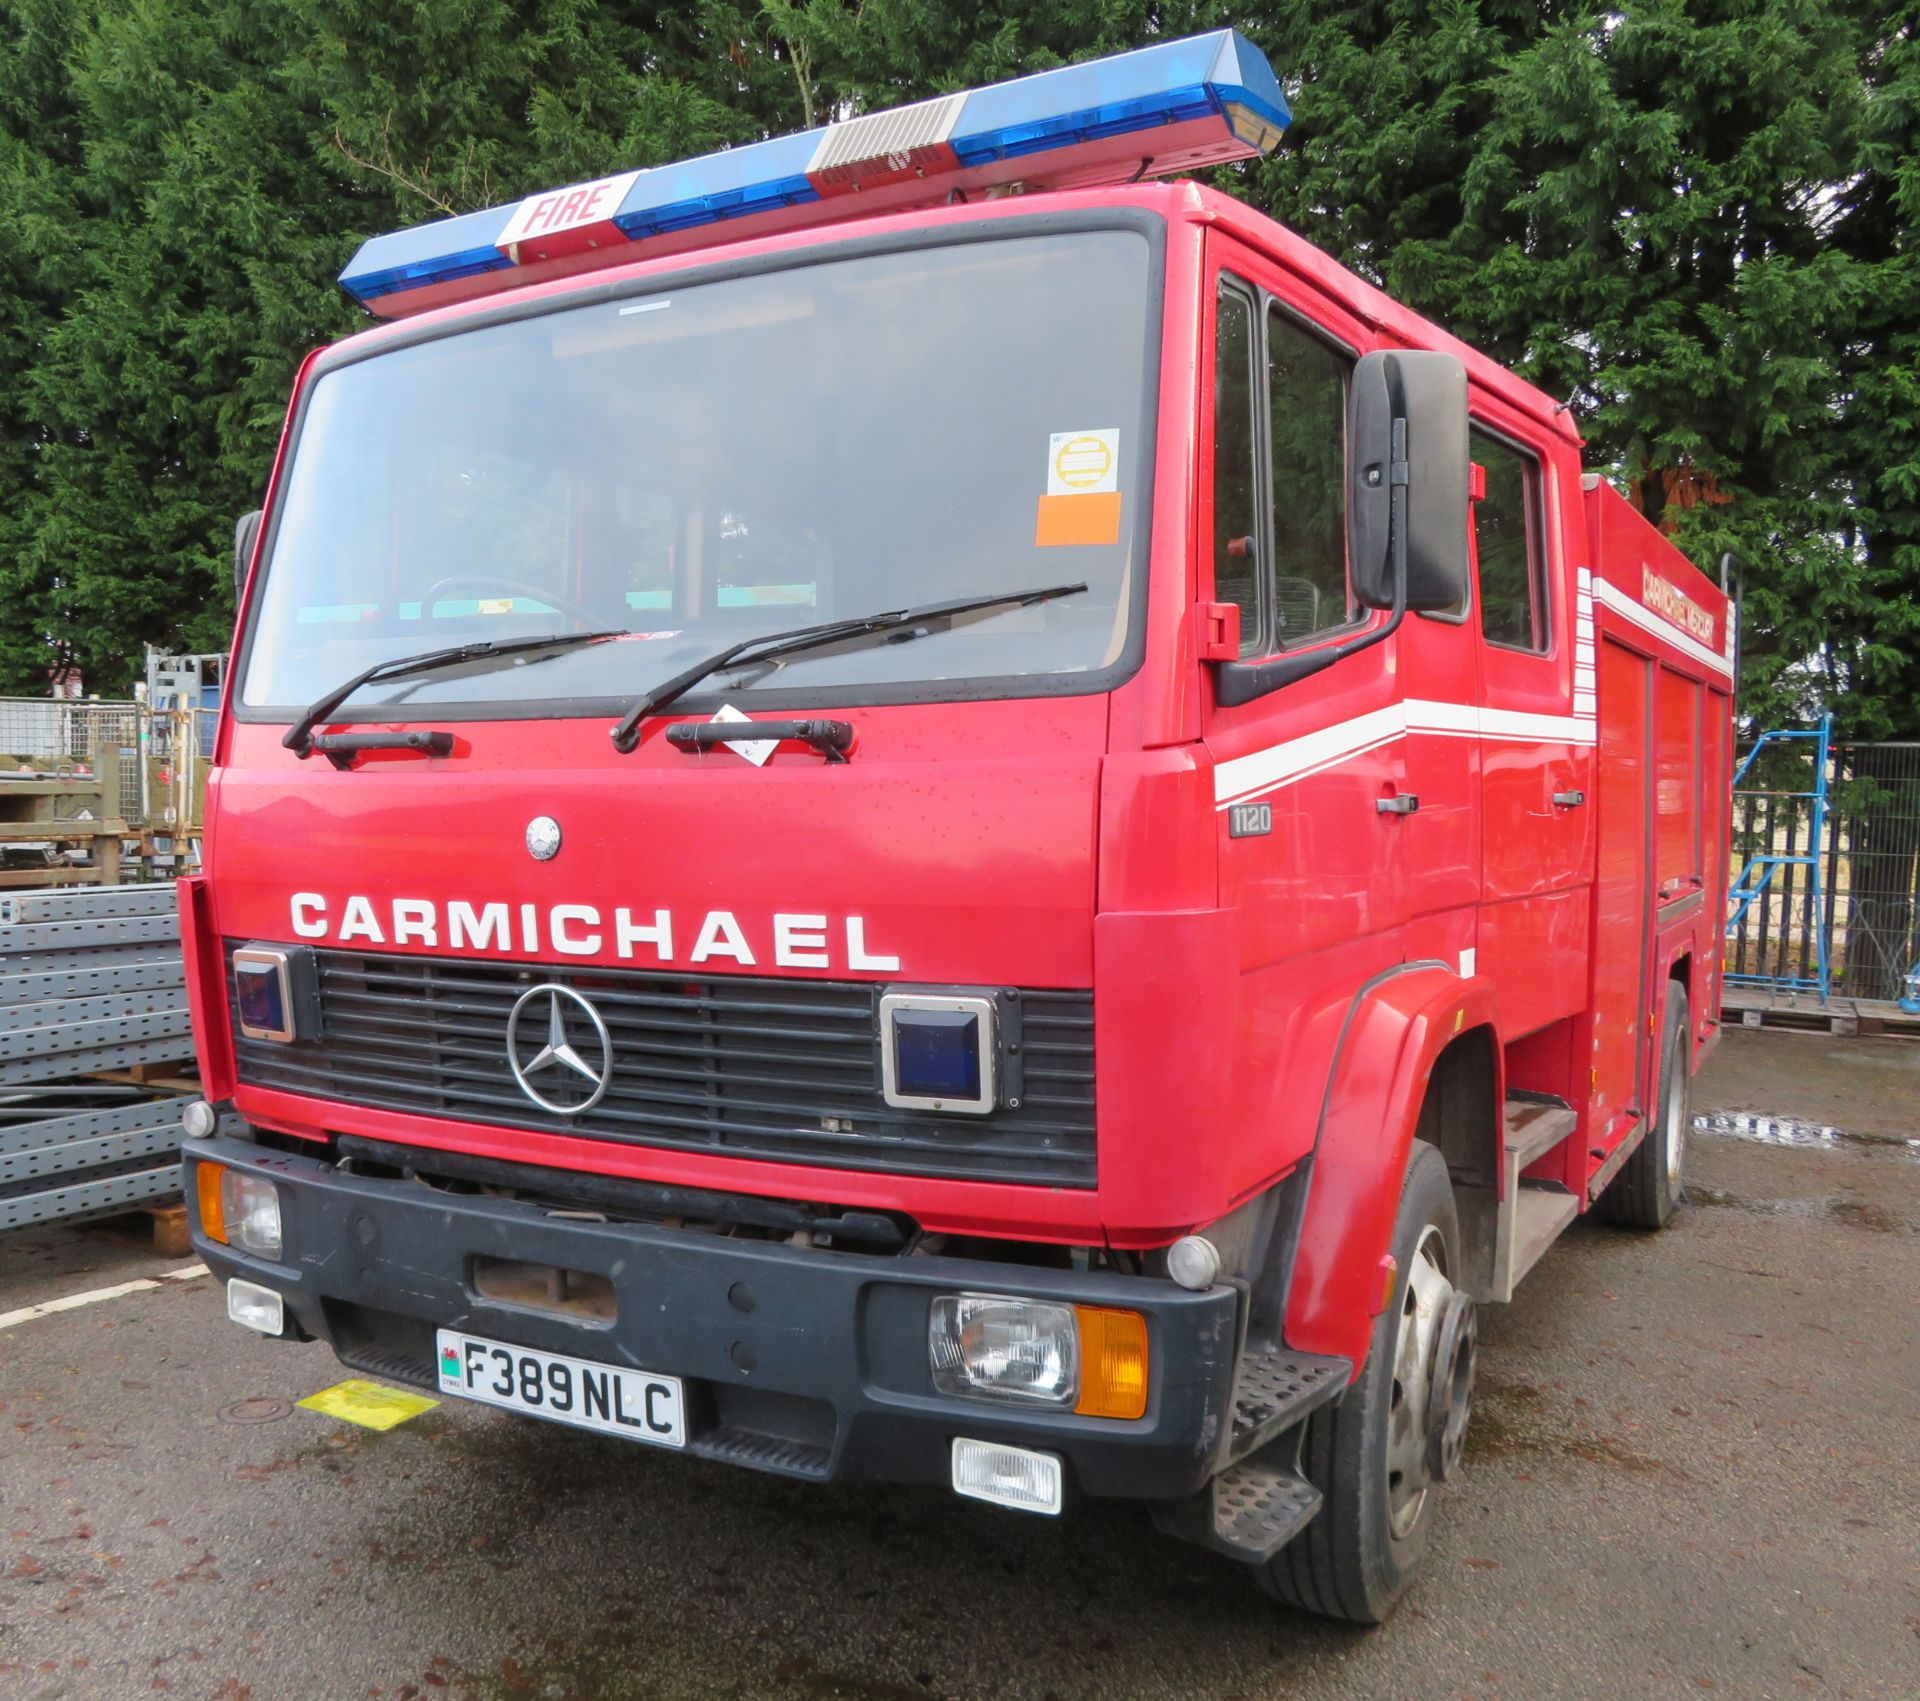 Carmichael 1120 Fire Engine - F reg - 1988 - Red - 958cc - Diesel - Mercedes-Benz Daimler-Benz Motor - Image 5 of 63